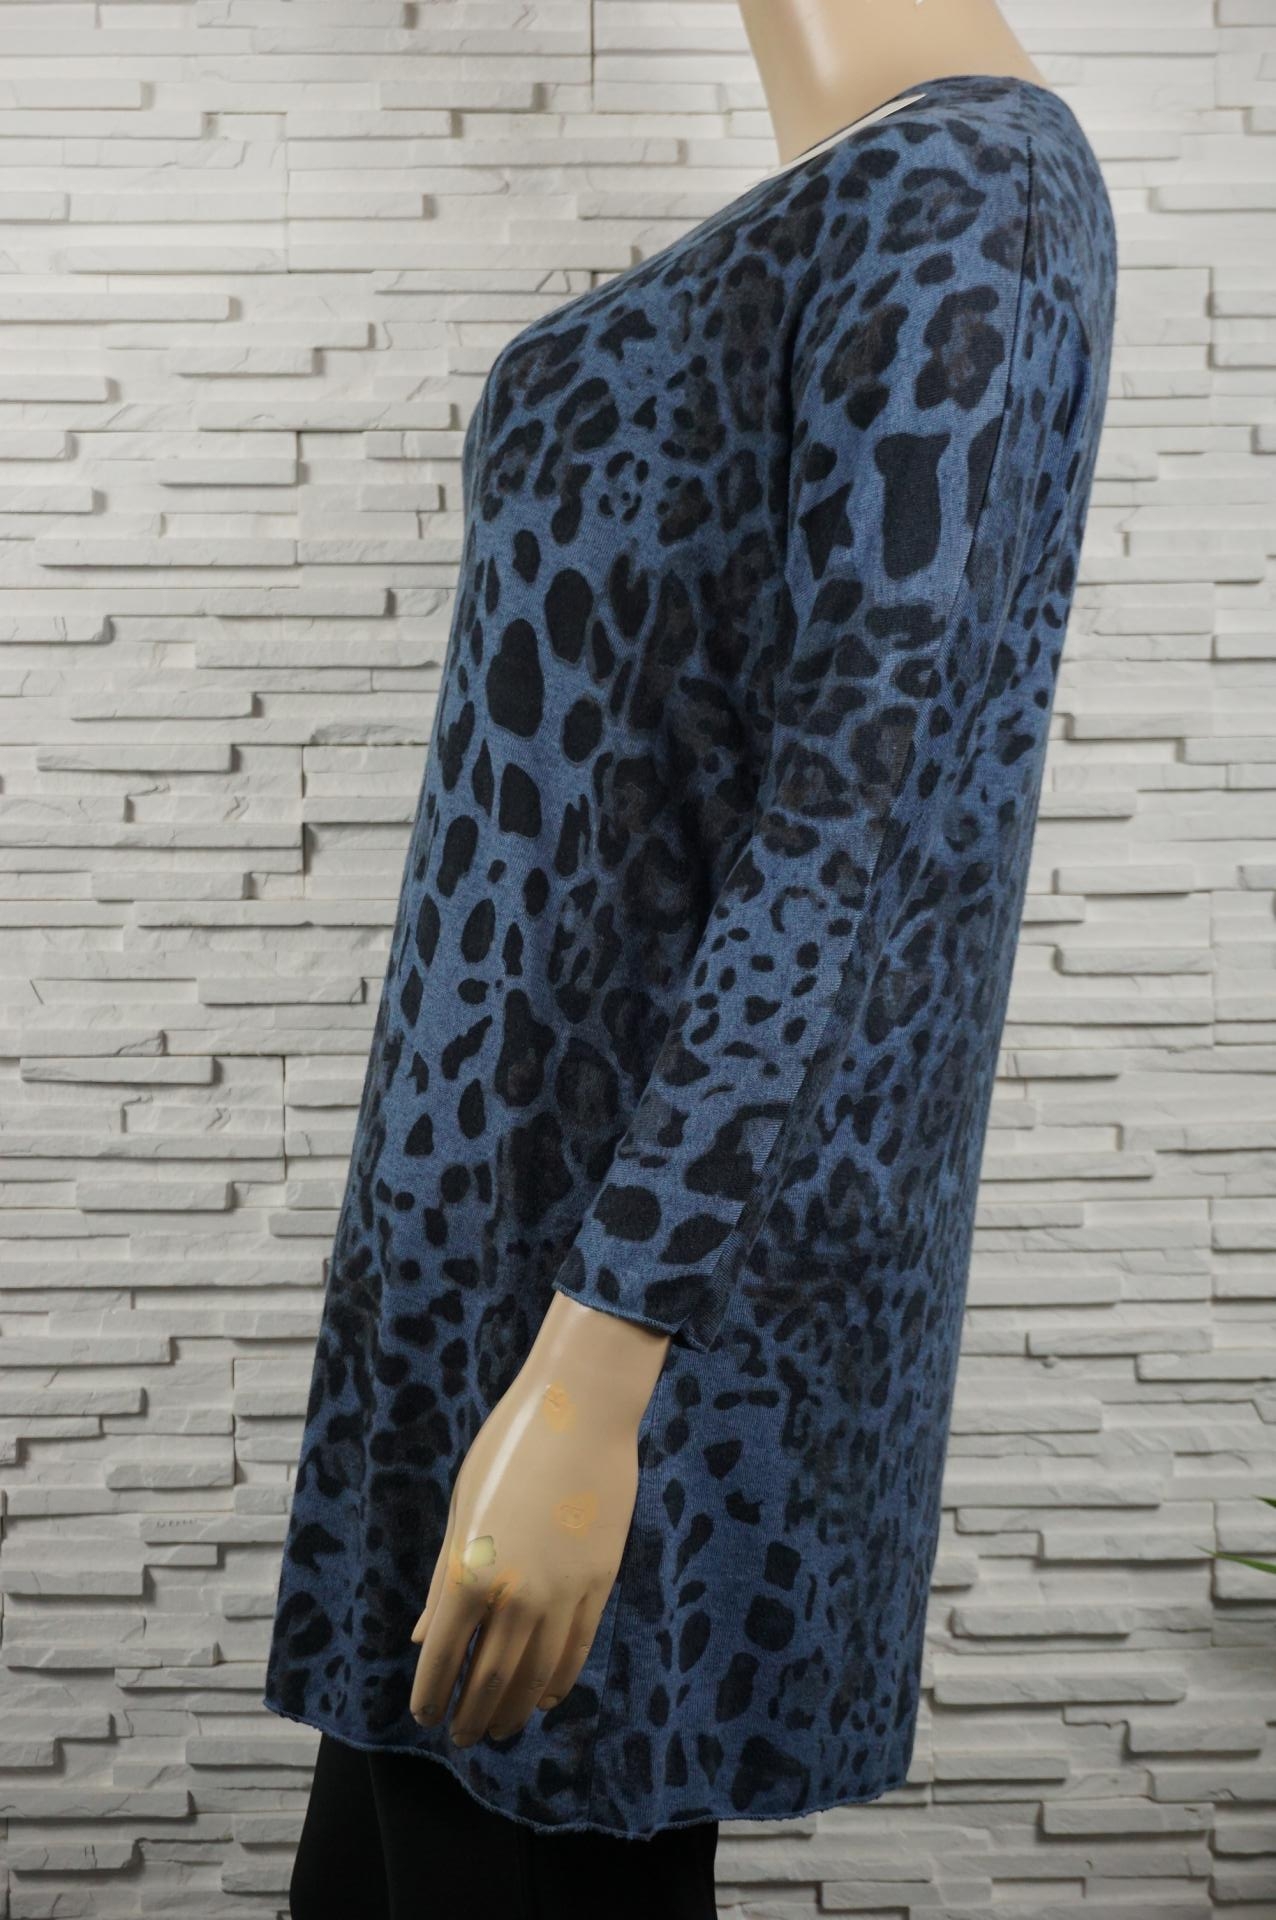 Robe ou pull léger long en léopard.